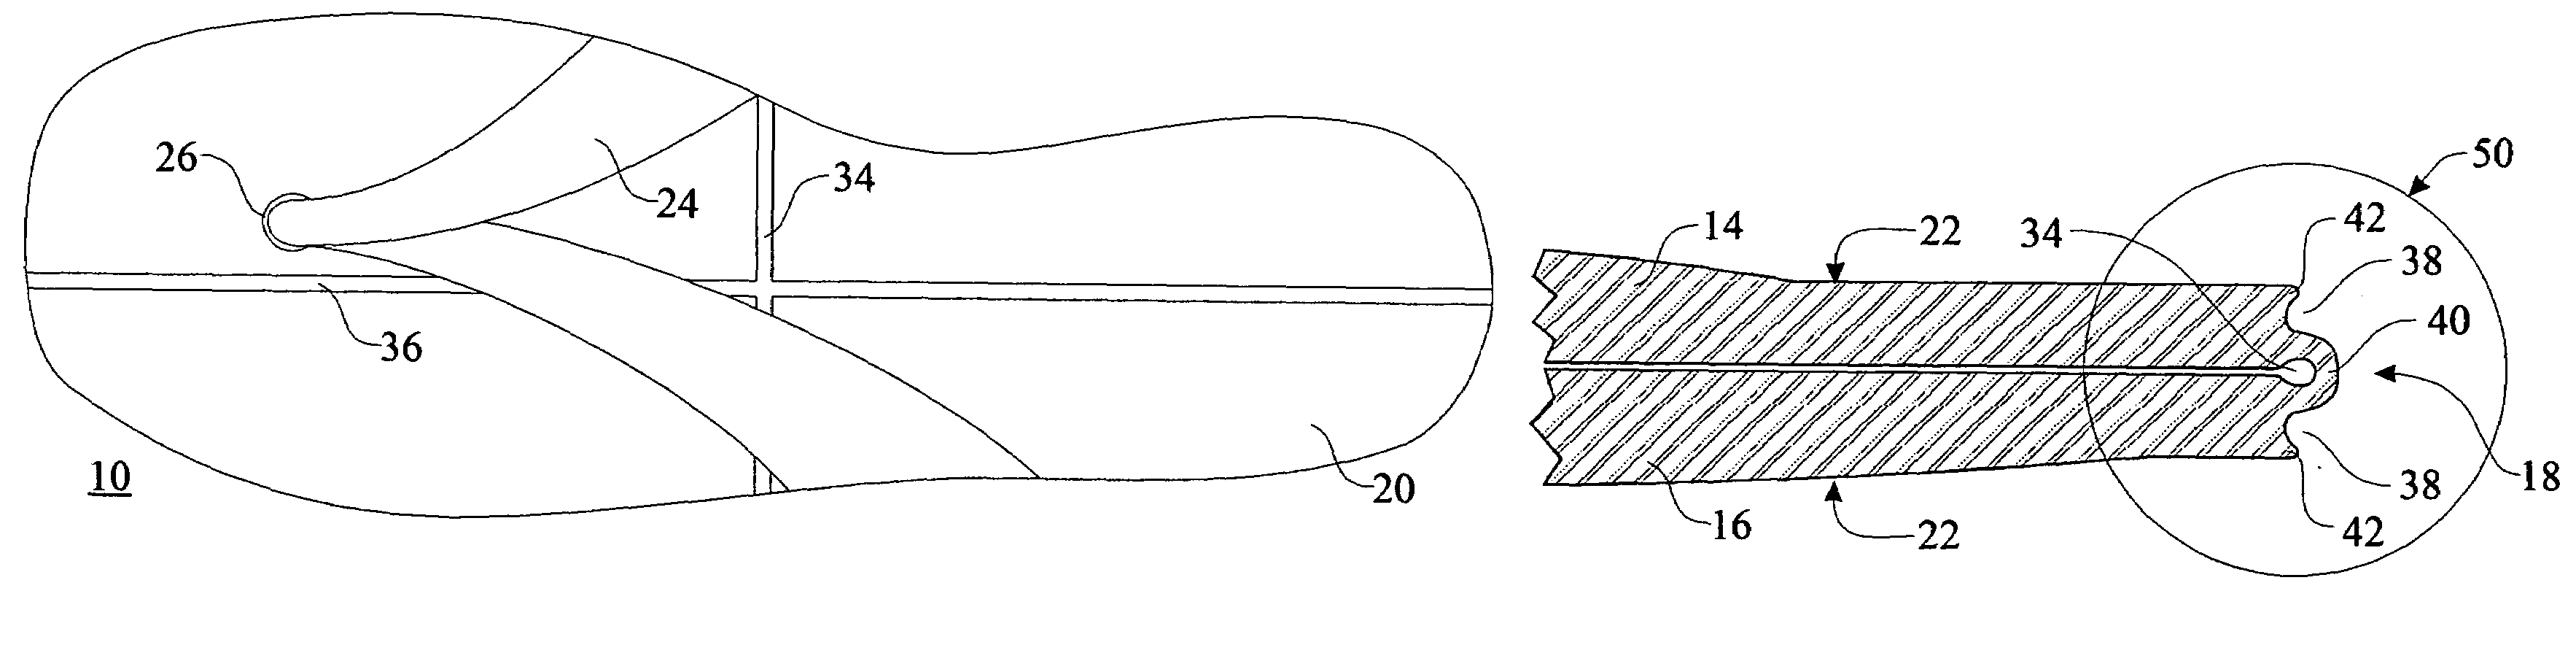 Foldable flip flop with formed hinge